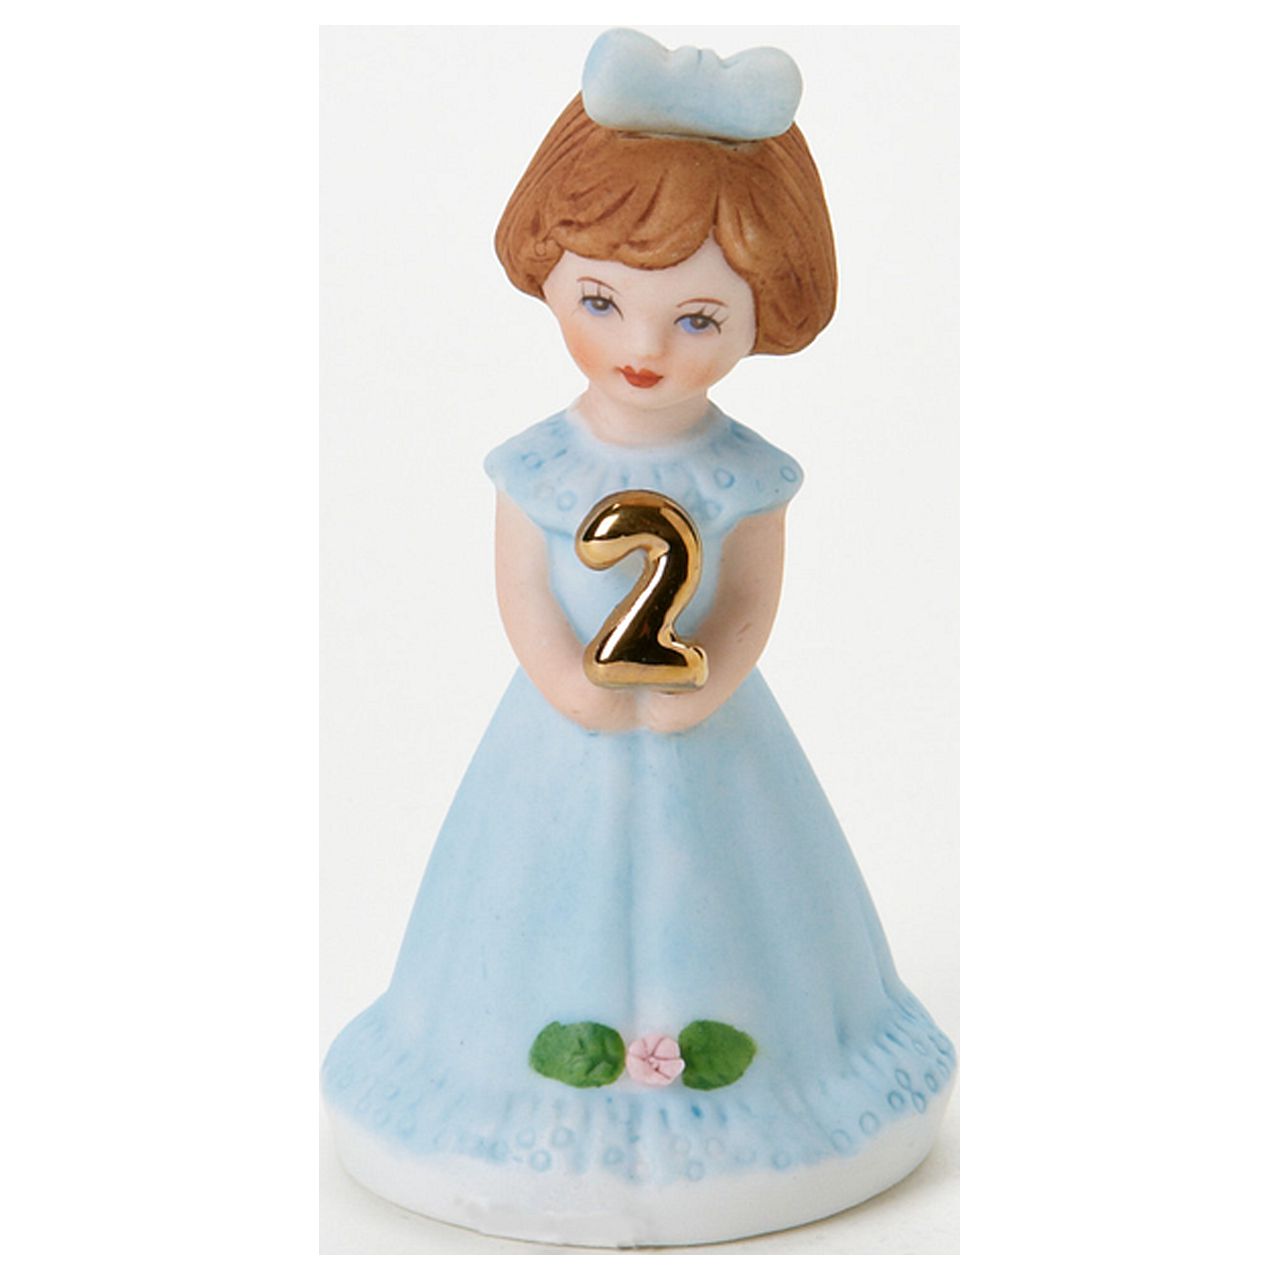 Growing Up Birthday Girls Brunette Age 2 Porcelain Bisque Figurine Q-GL648 - image 4 of 5